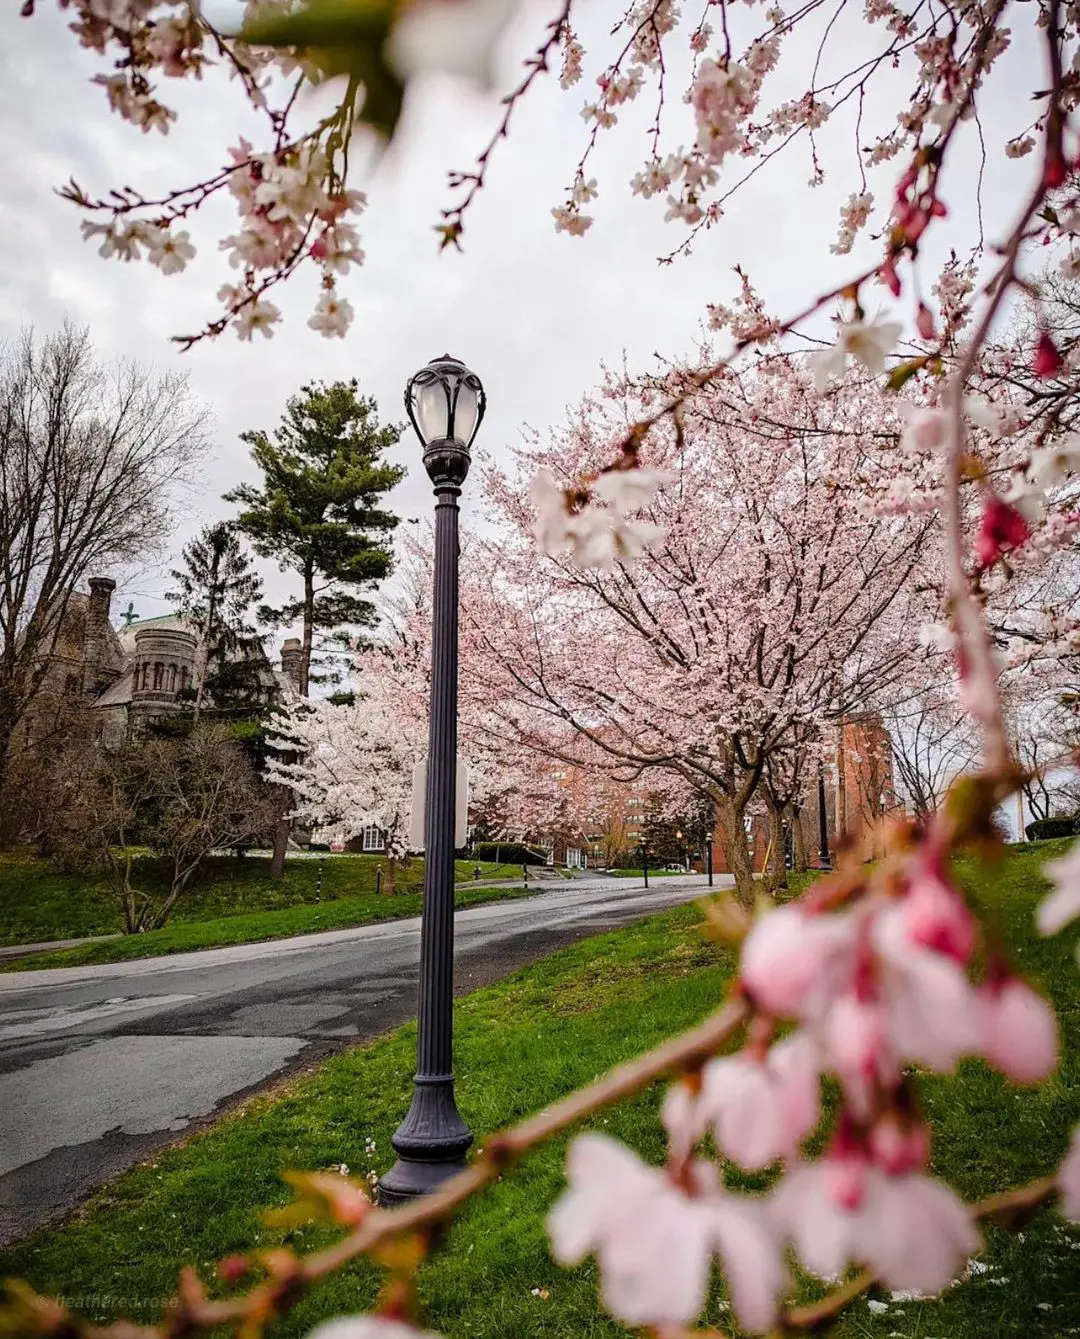 Flower blooming at Washington Park, Albany NY (photo by @heathered.rose)